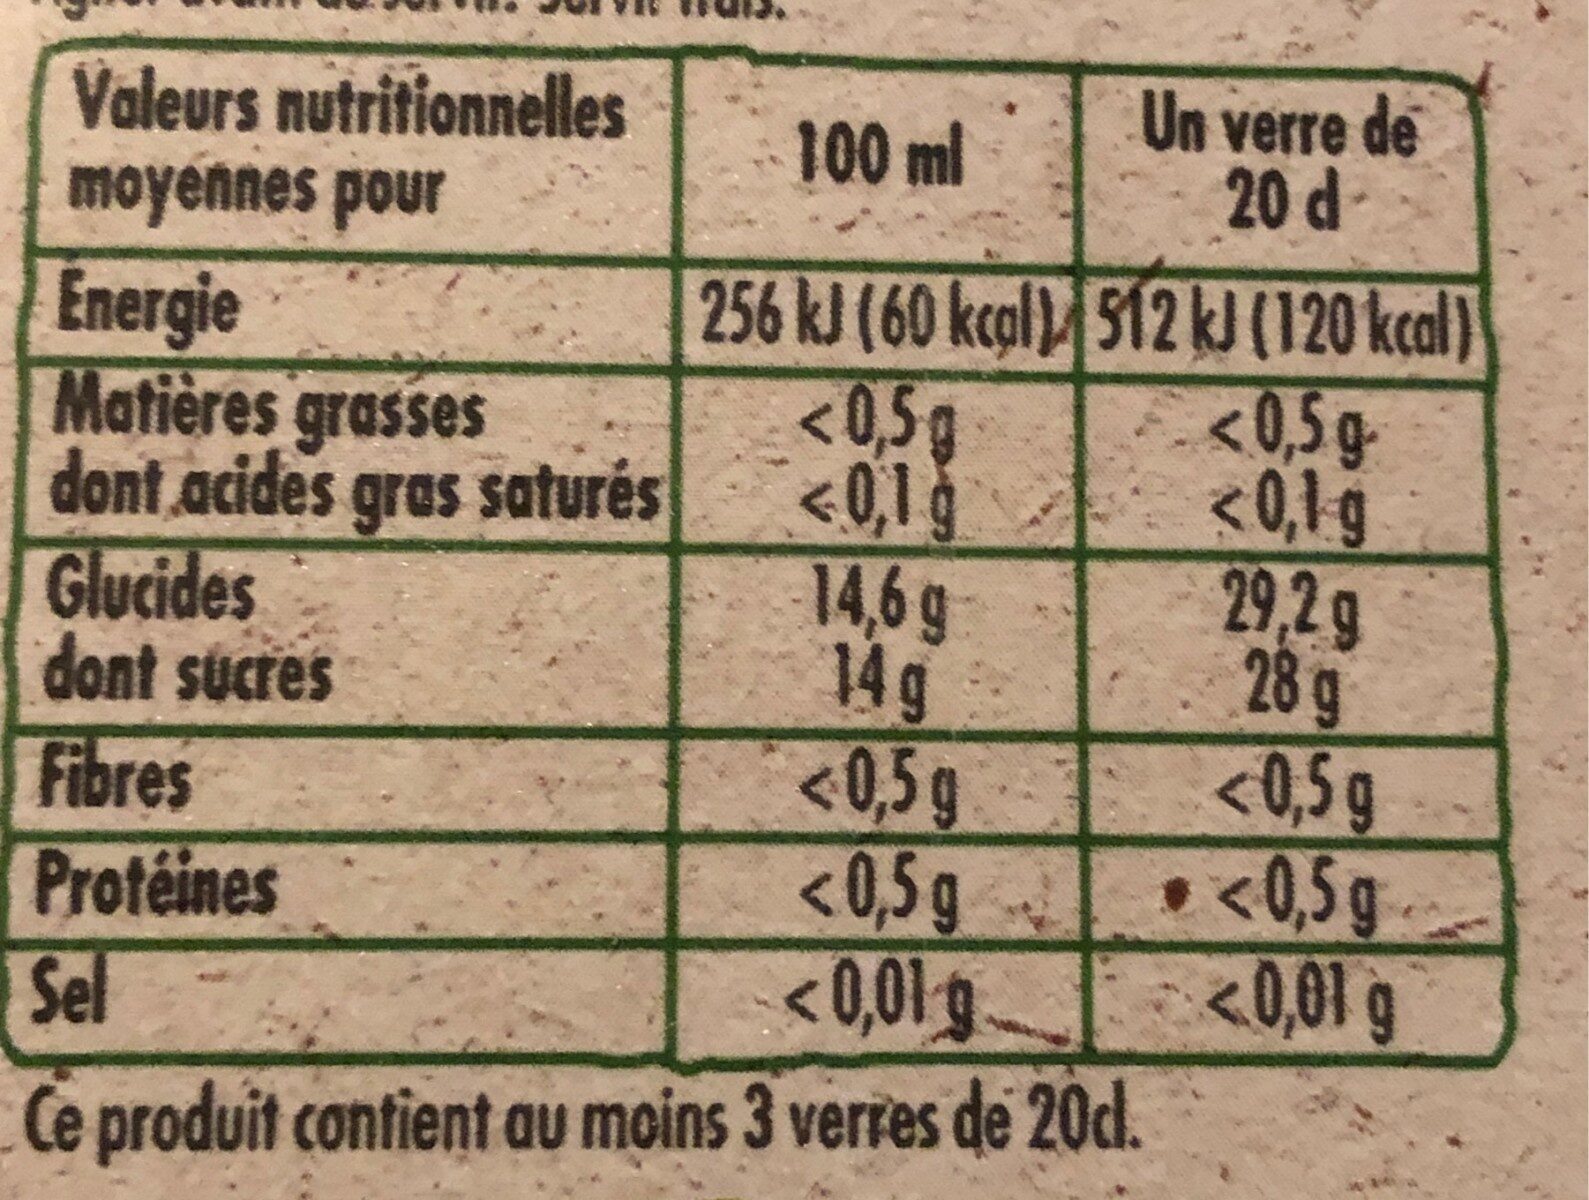 100% pur jus de fruits rouges BIO - Voedingswaarden - fr